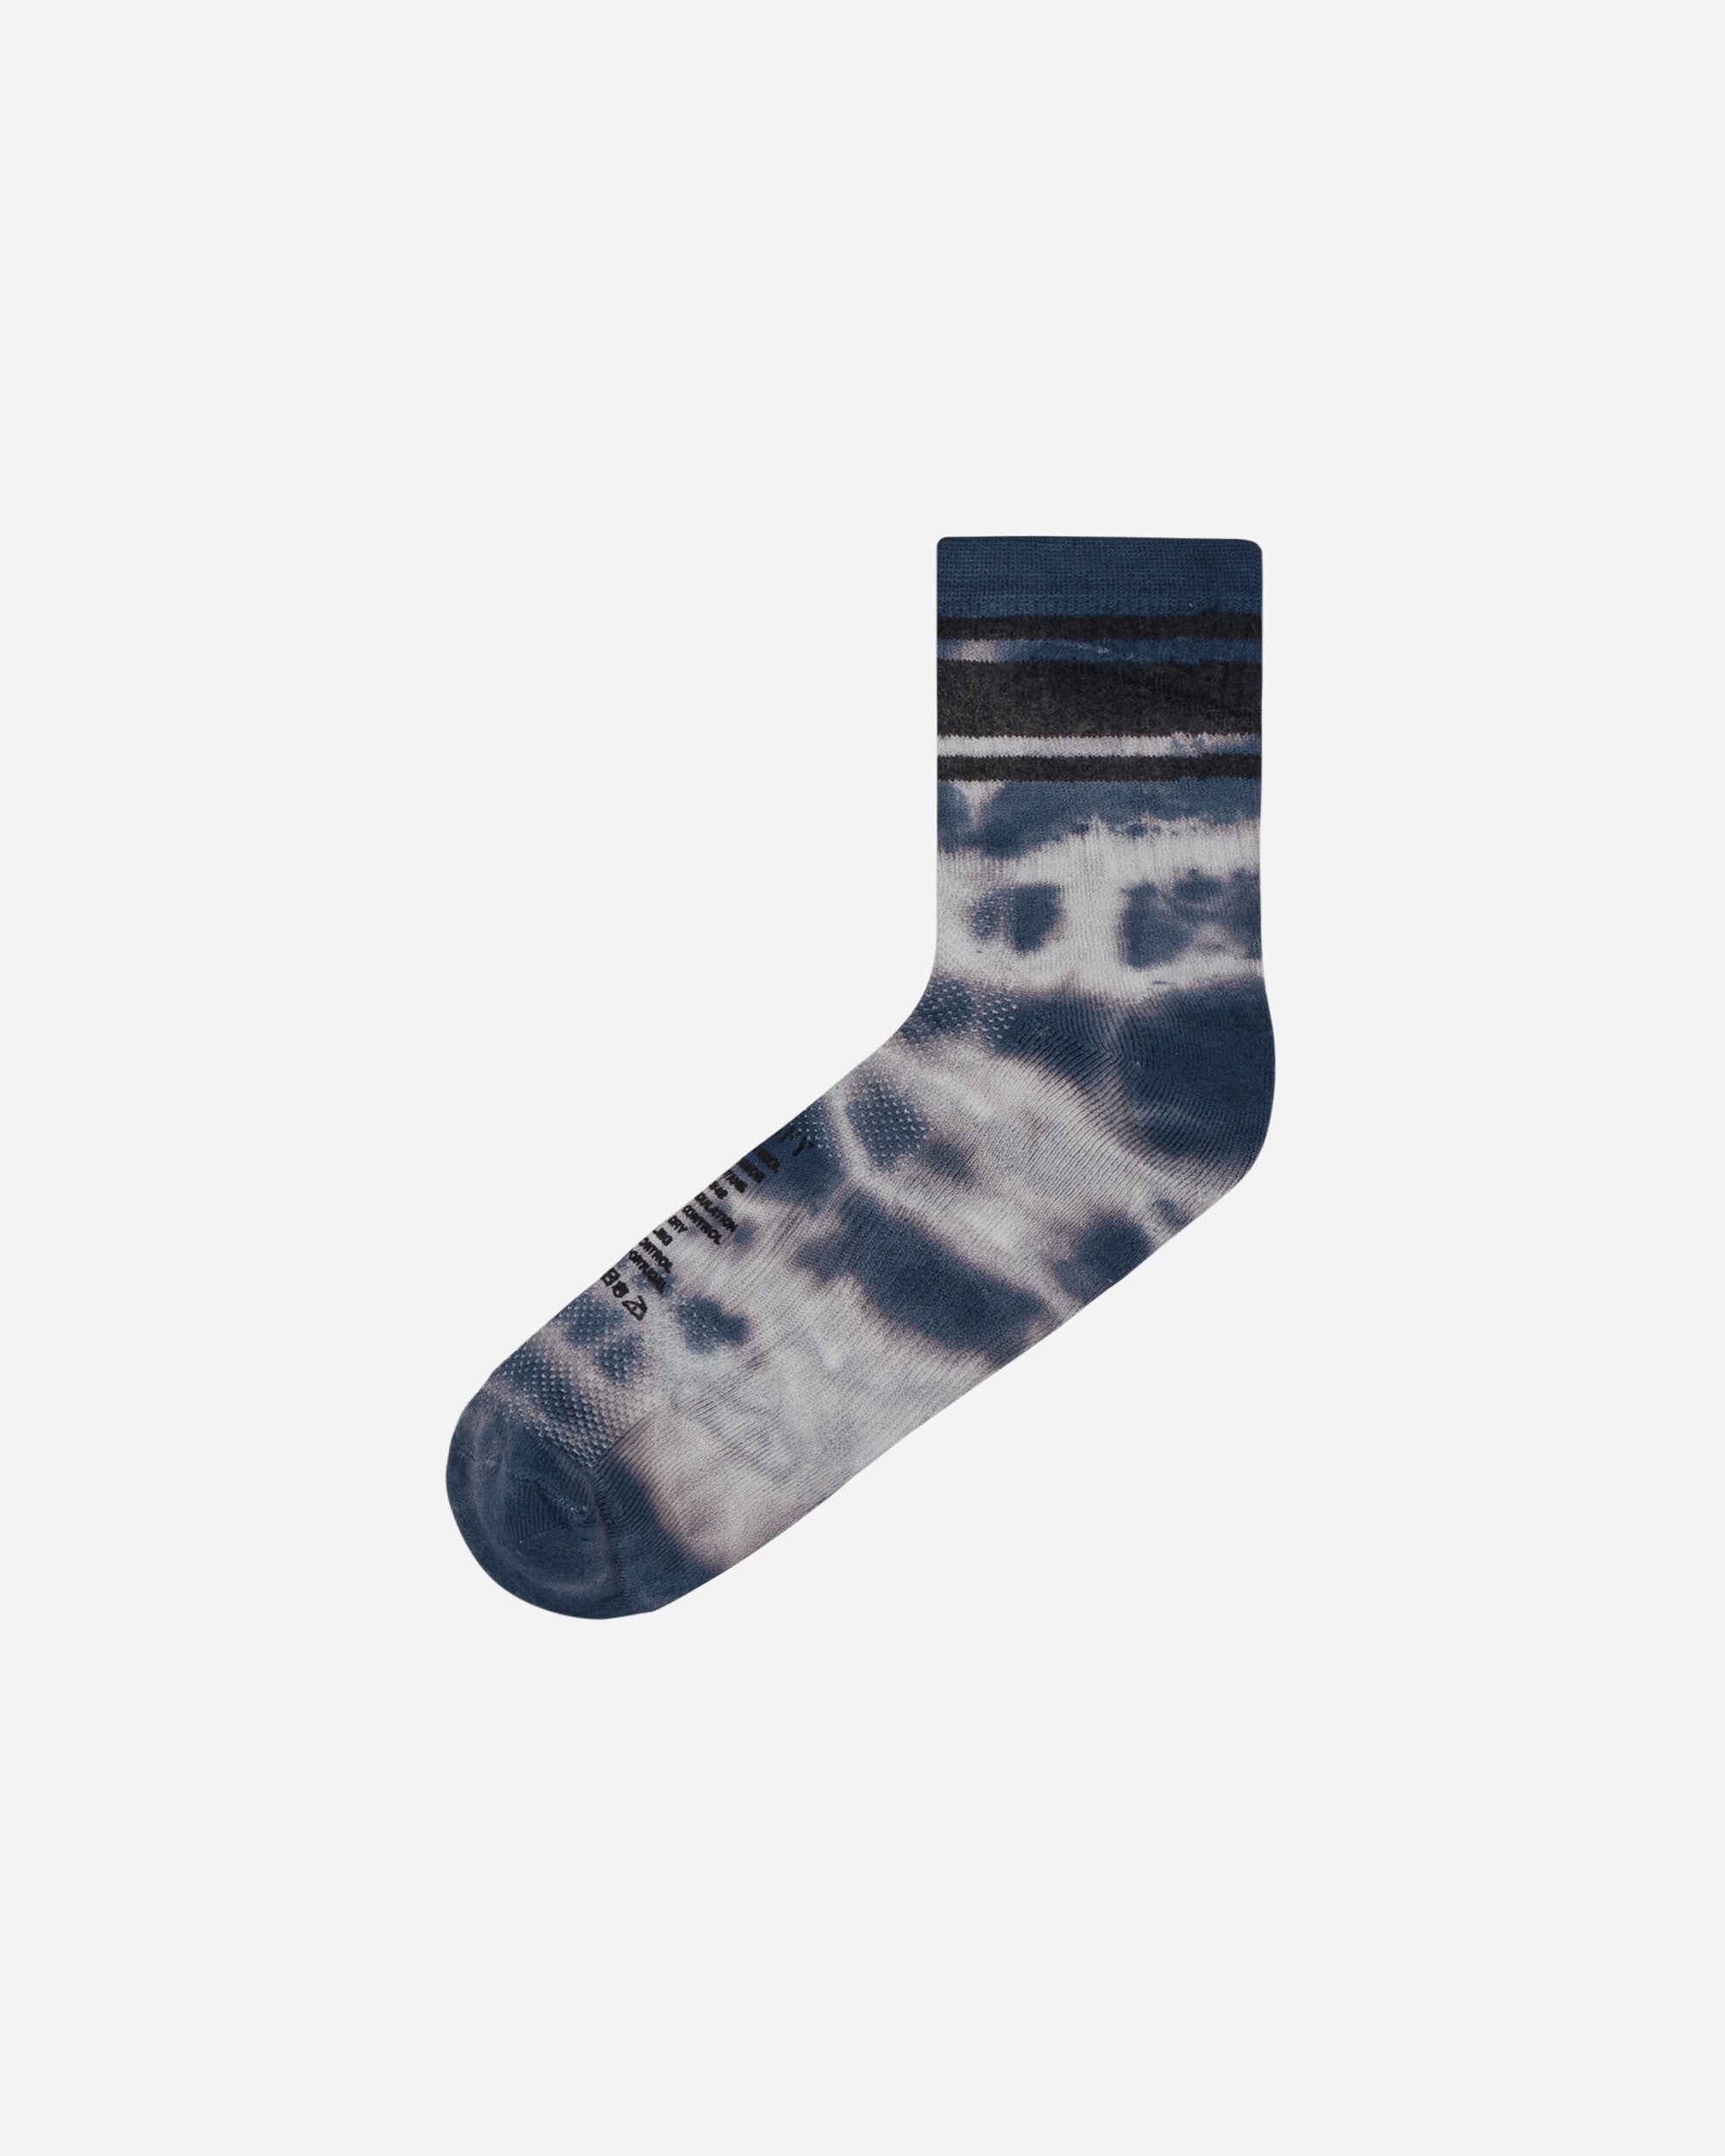 Satisfy Merino Tube Socks Ink Tie-Dye Underwear Socks 5110 IN